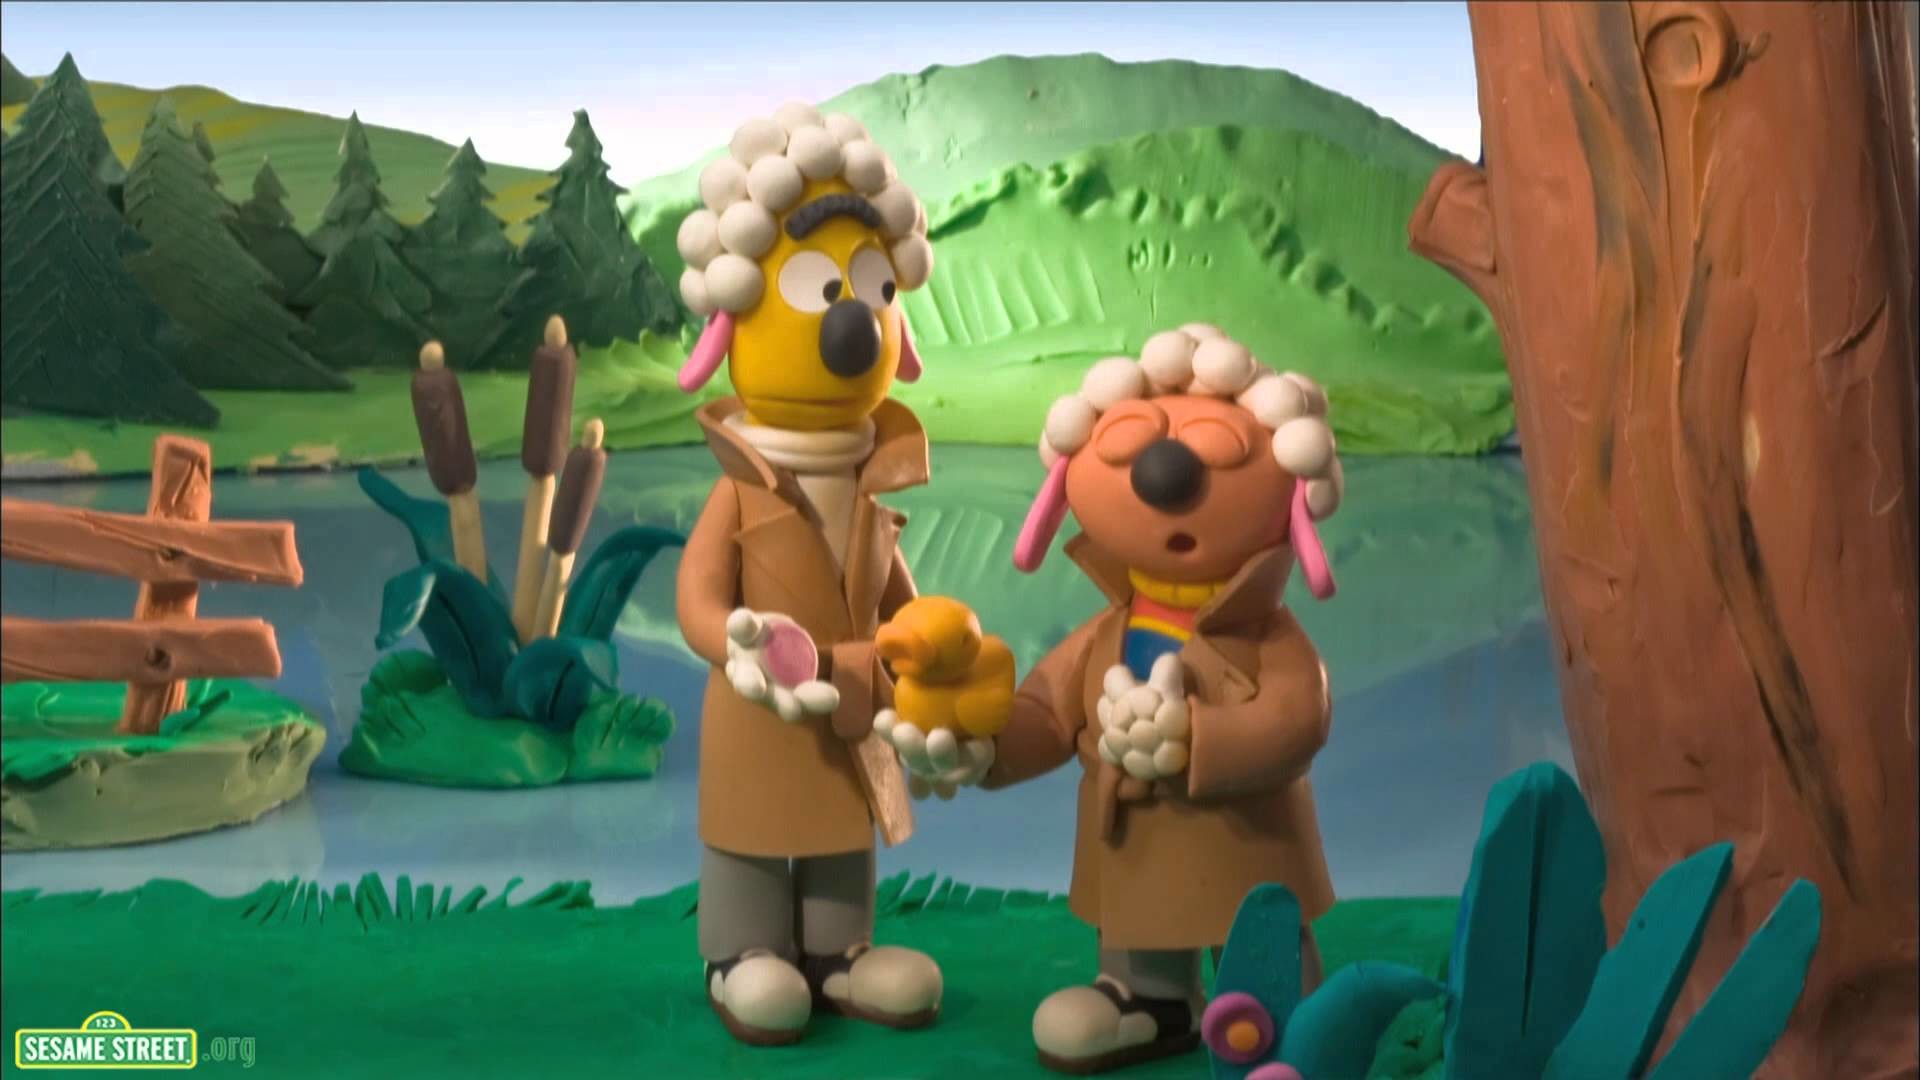 1920x1080 Sesame Street: Bert and Ernie's Great Adventures -- Maltese Ducky - YouTube